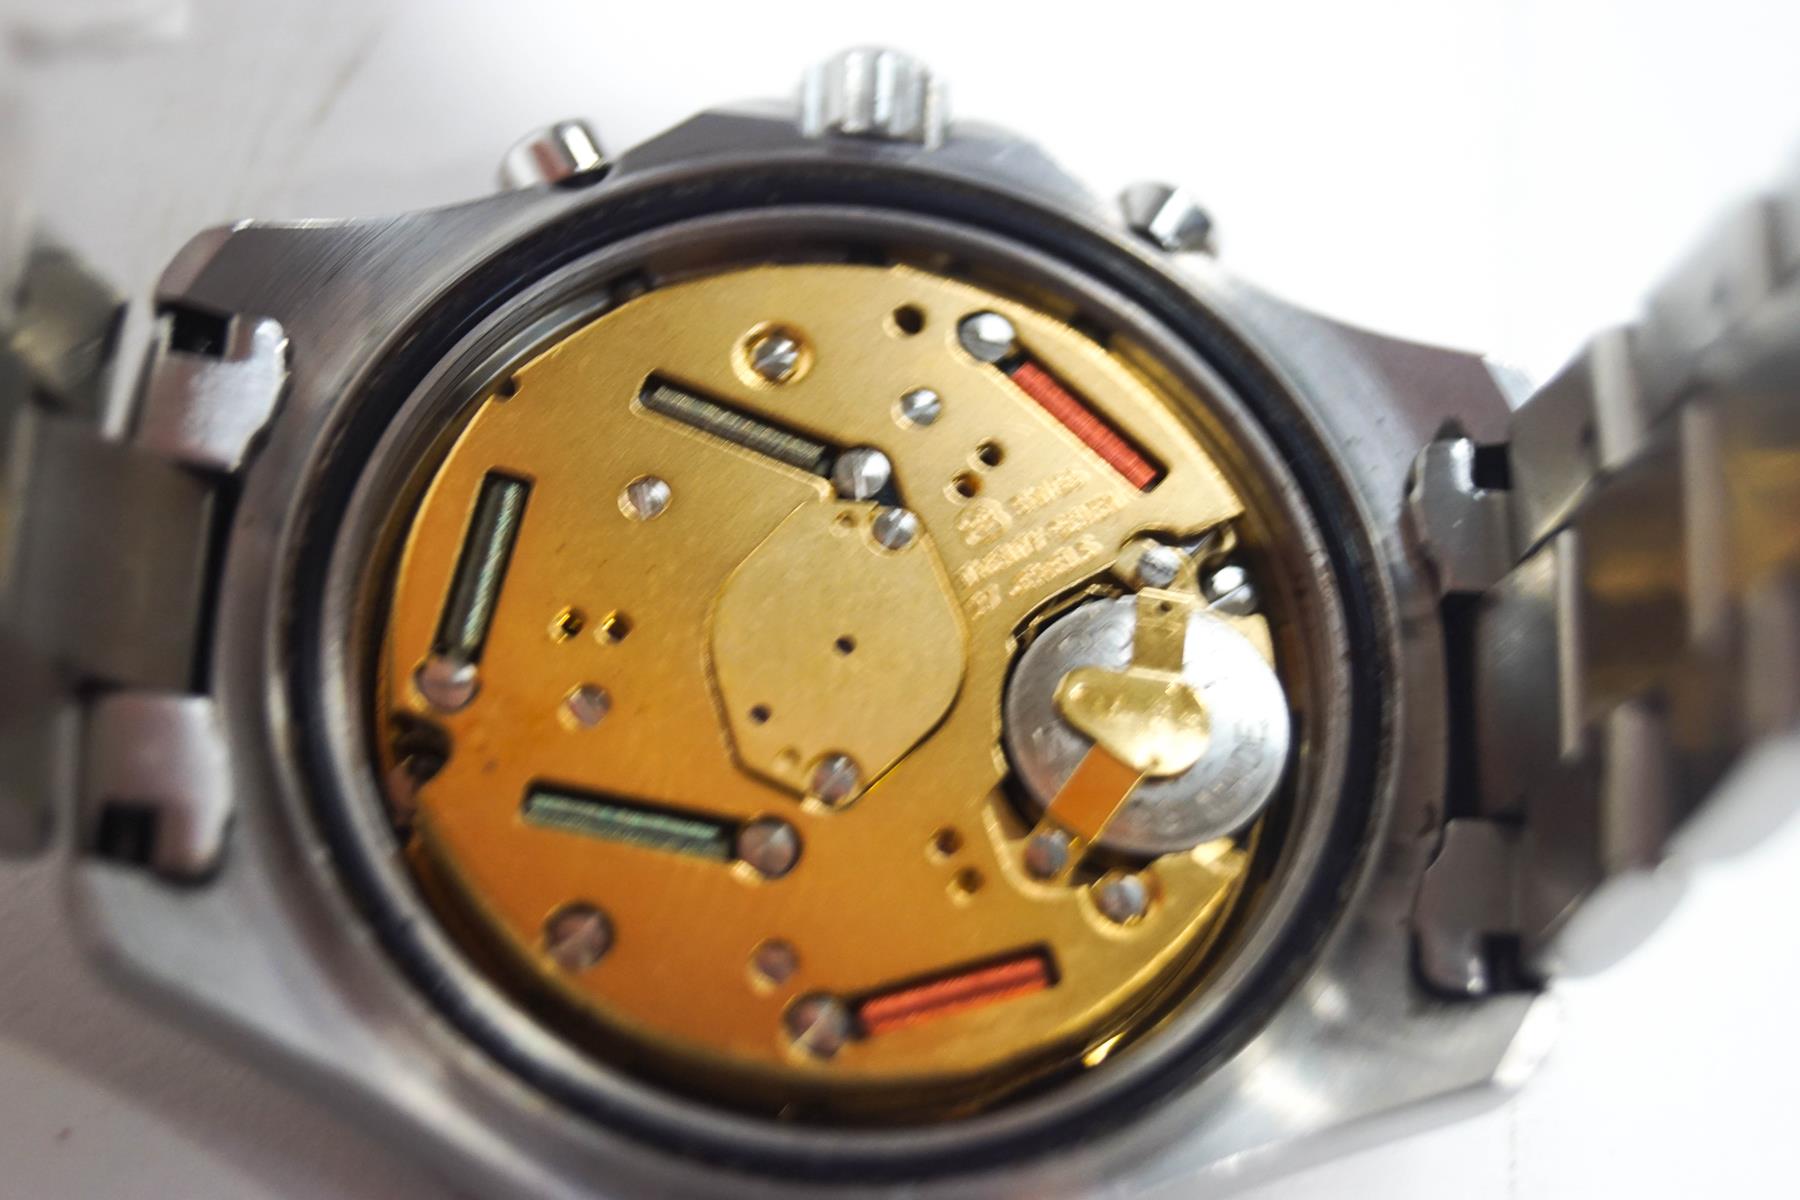 Tag Heuer, 300M Aquaracer gentleman's stainless steel chronograph bracelet watch, - Image 4 of 5